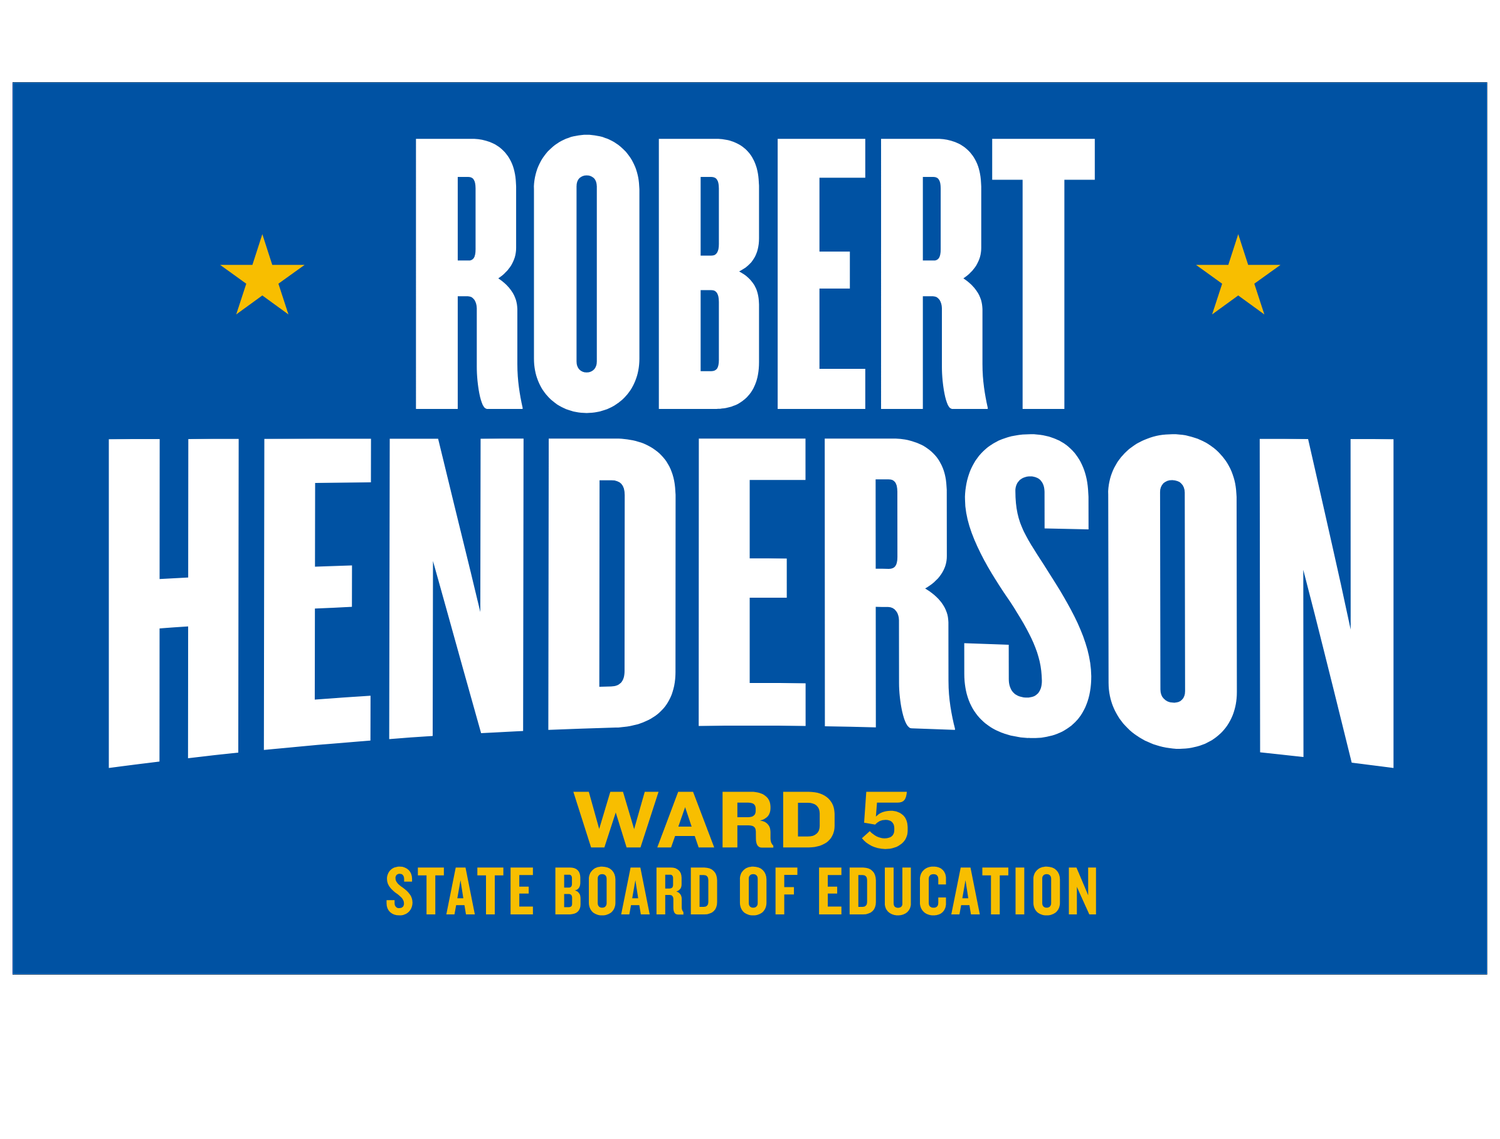 Robert Henderson for Ward 5 SBOE